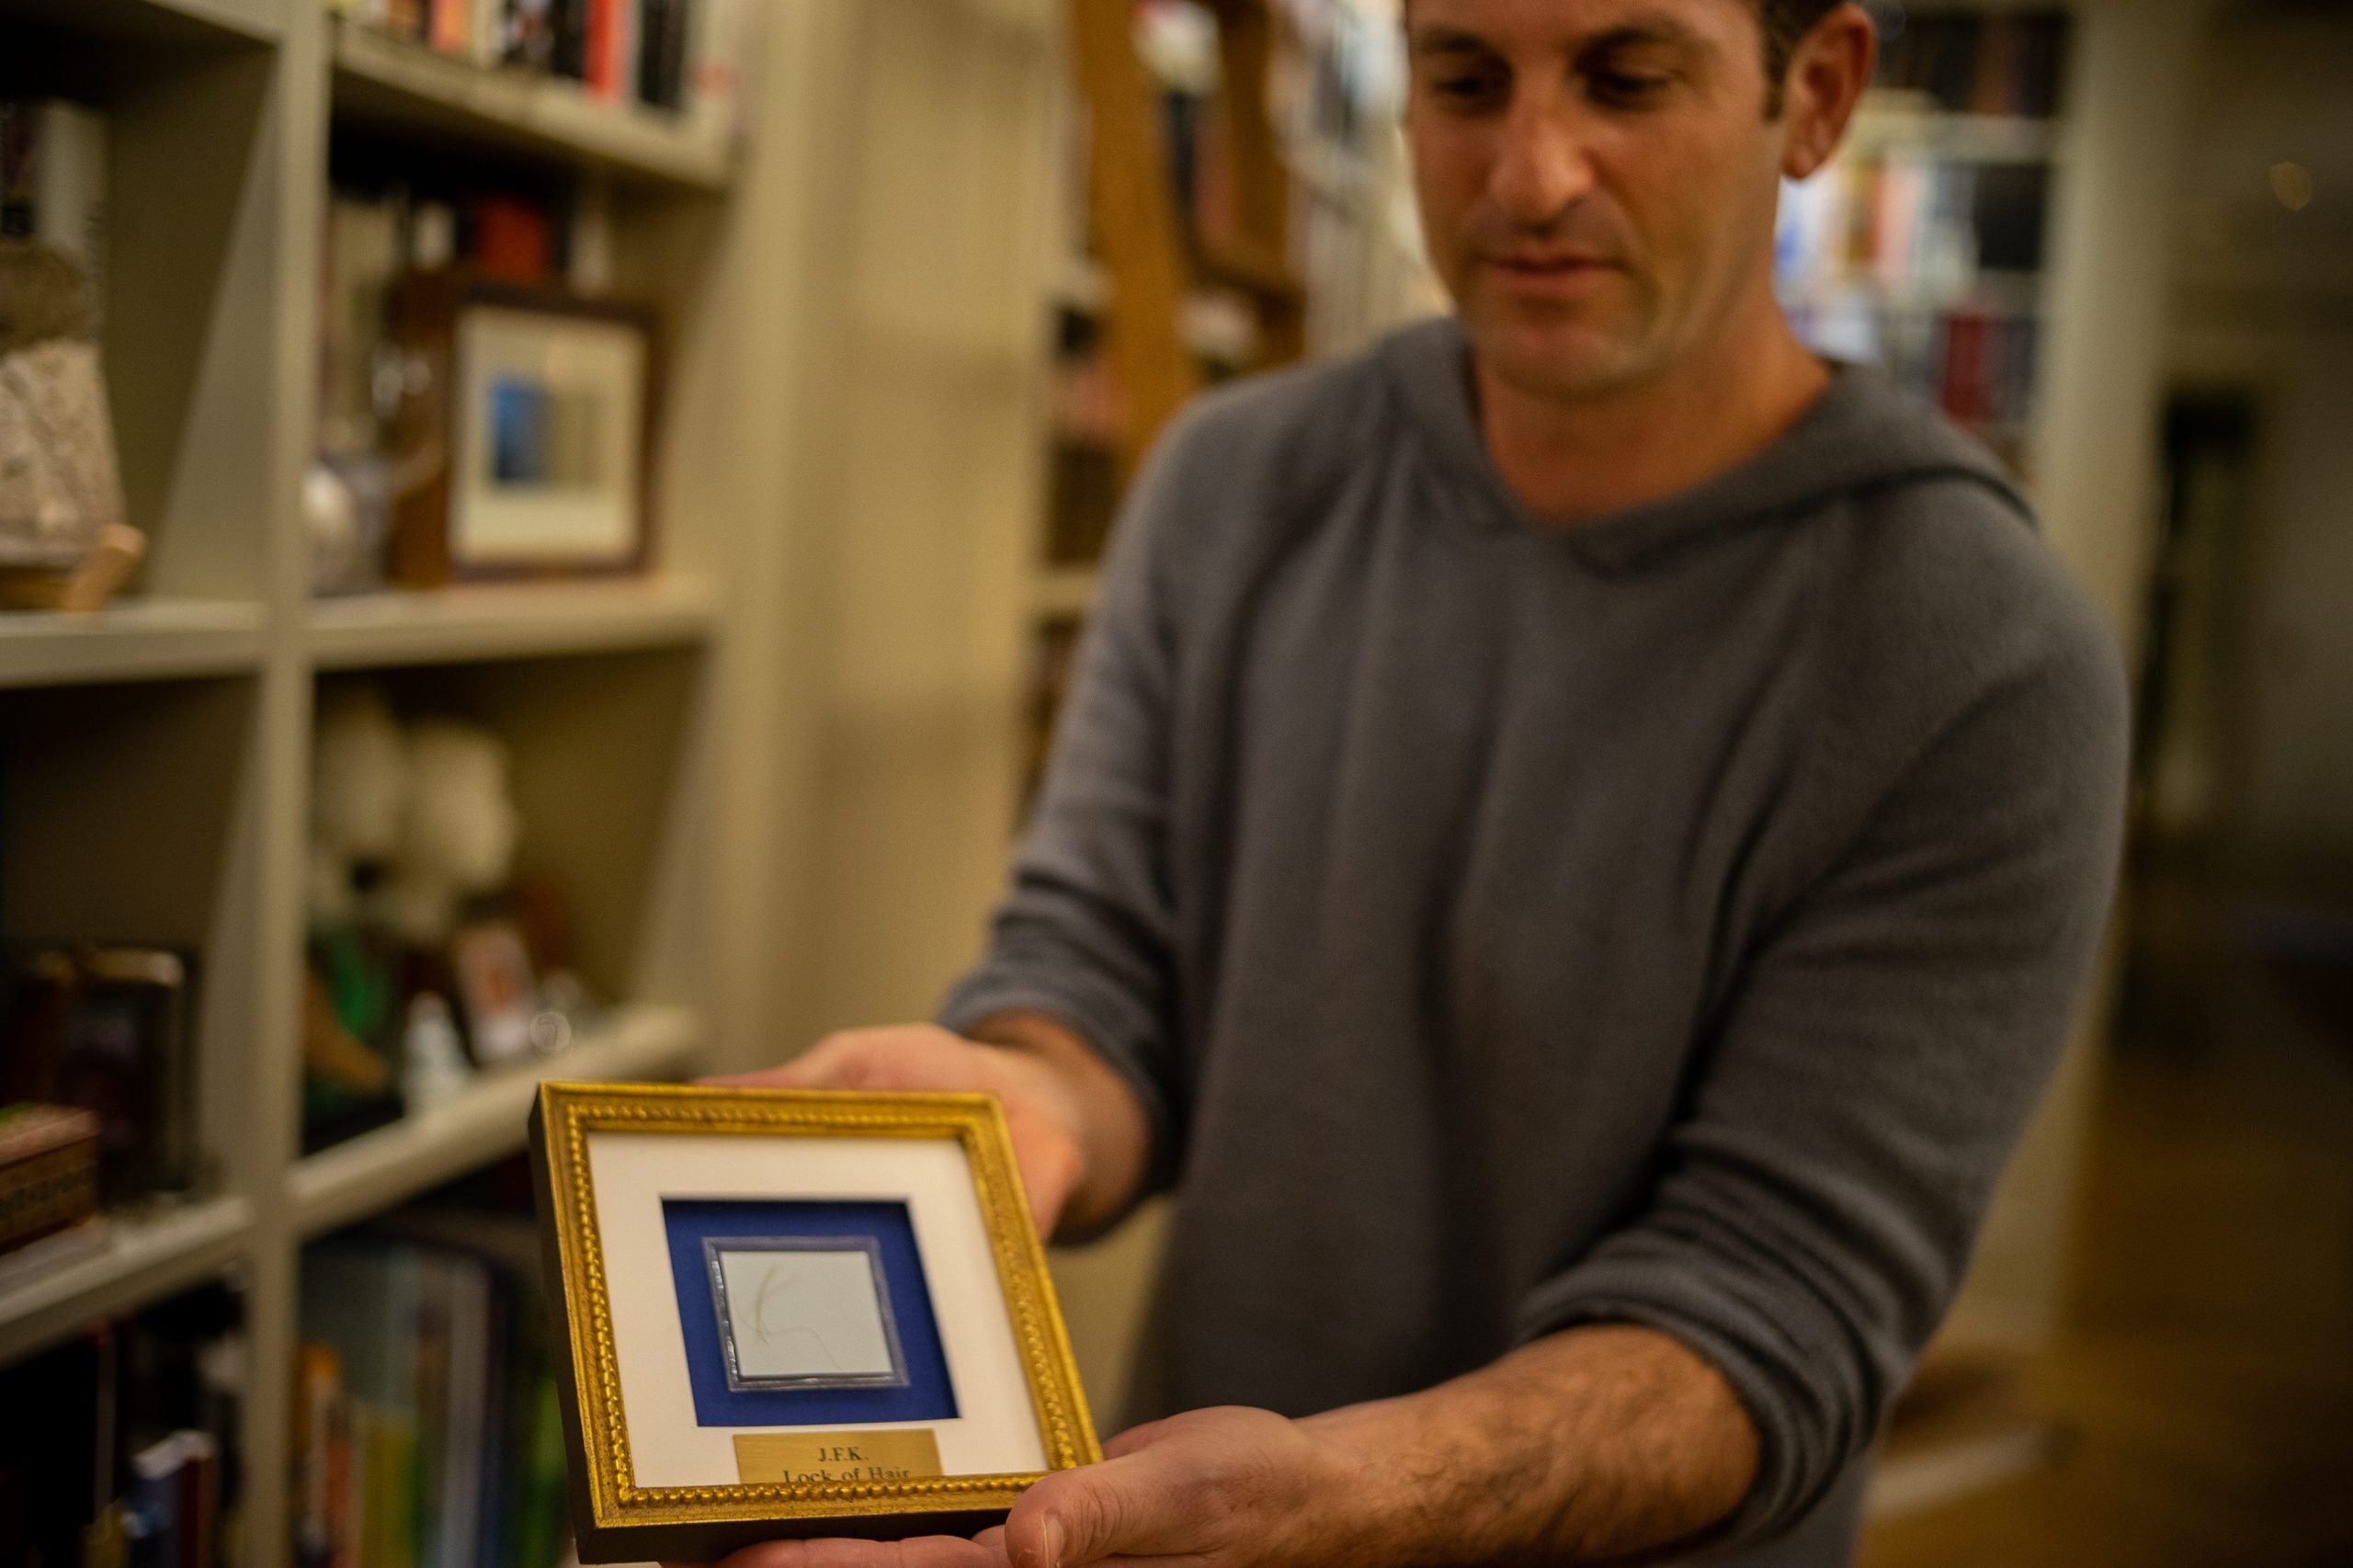 A man displays a framed item.